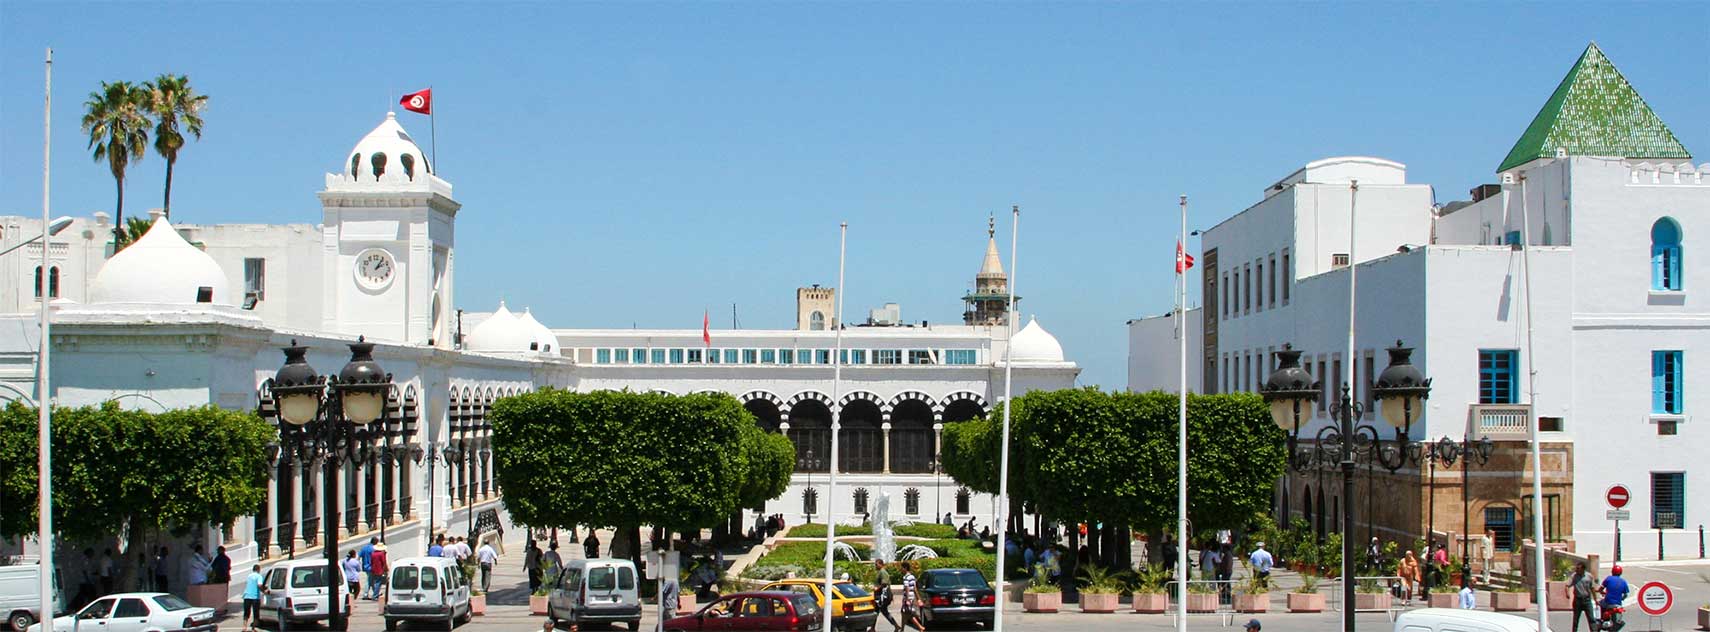 Kasbah Square in Tunis, Tunisia